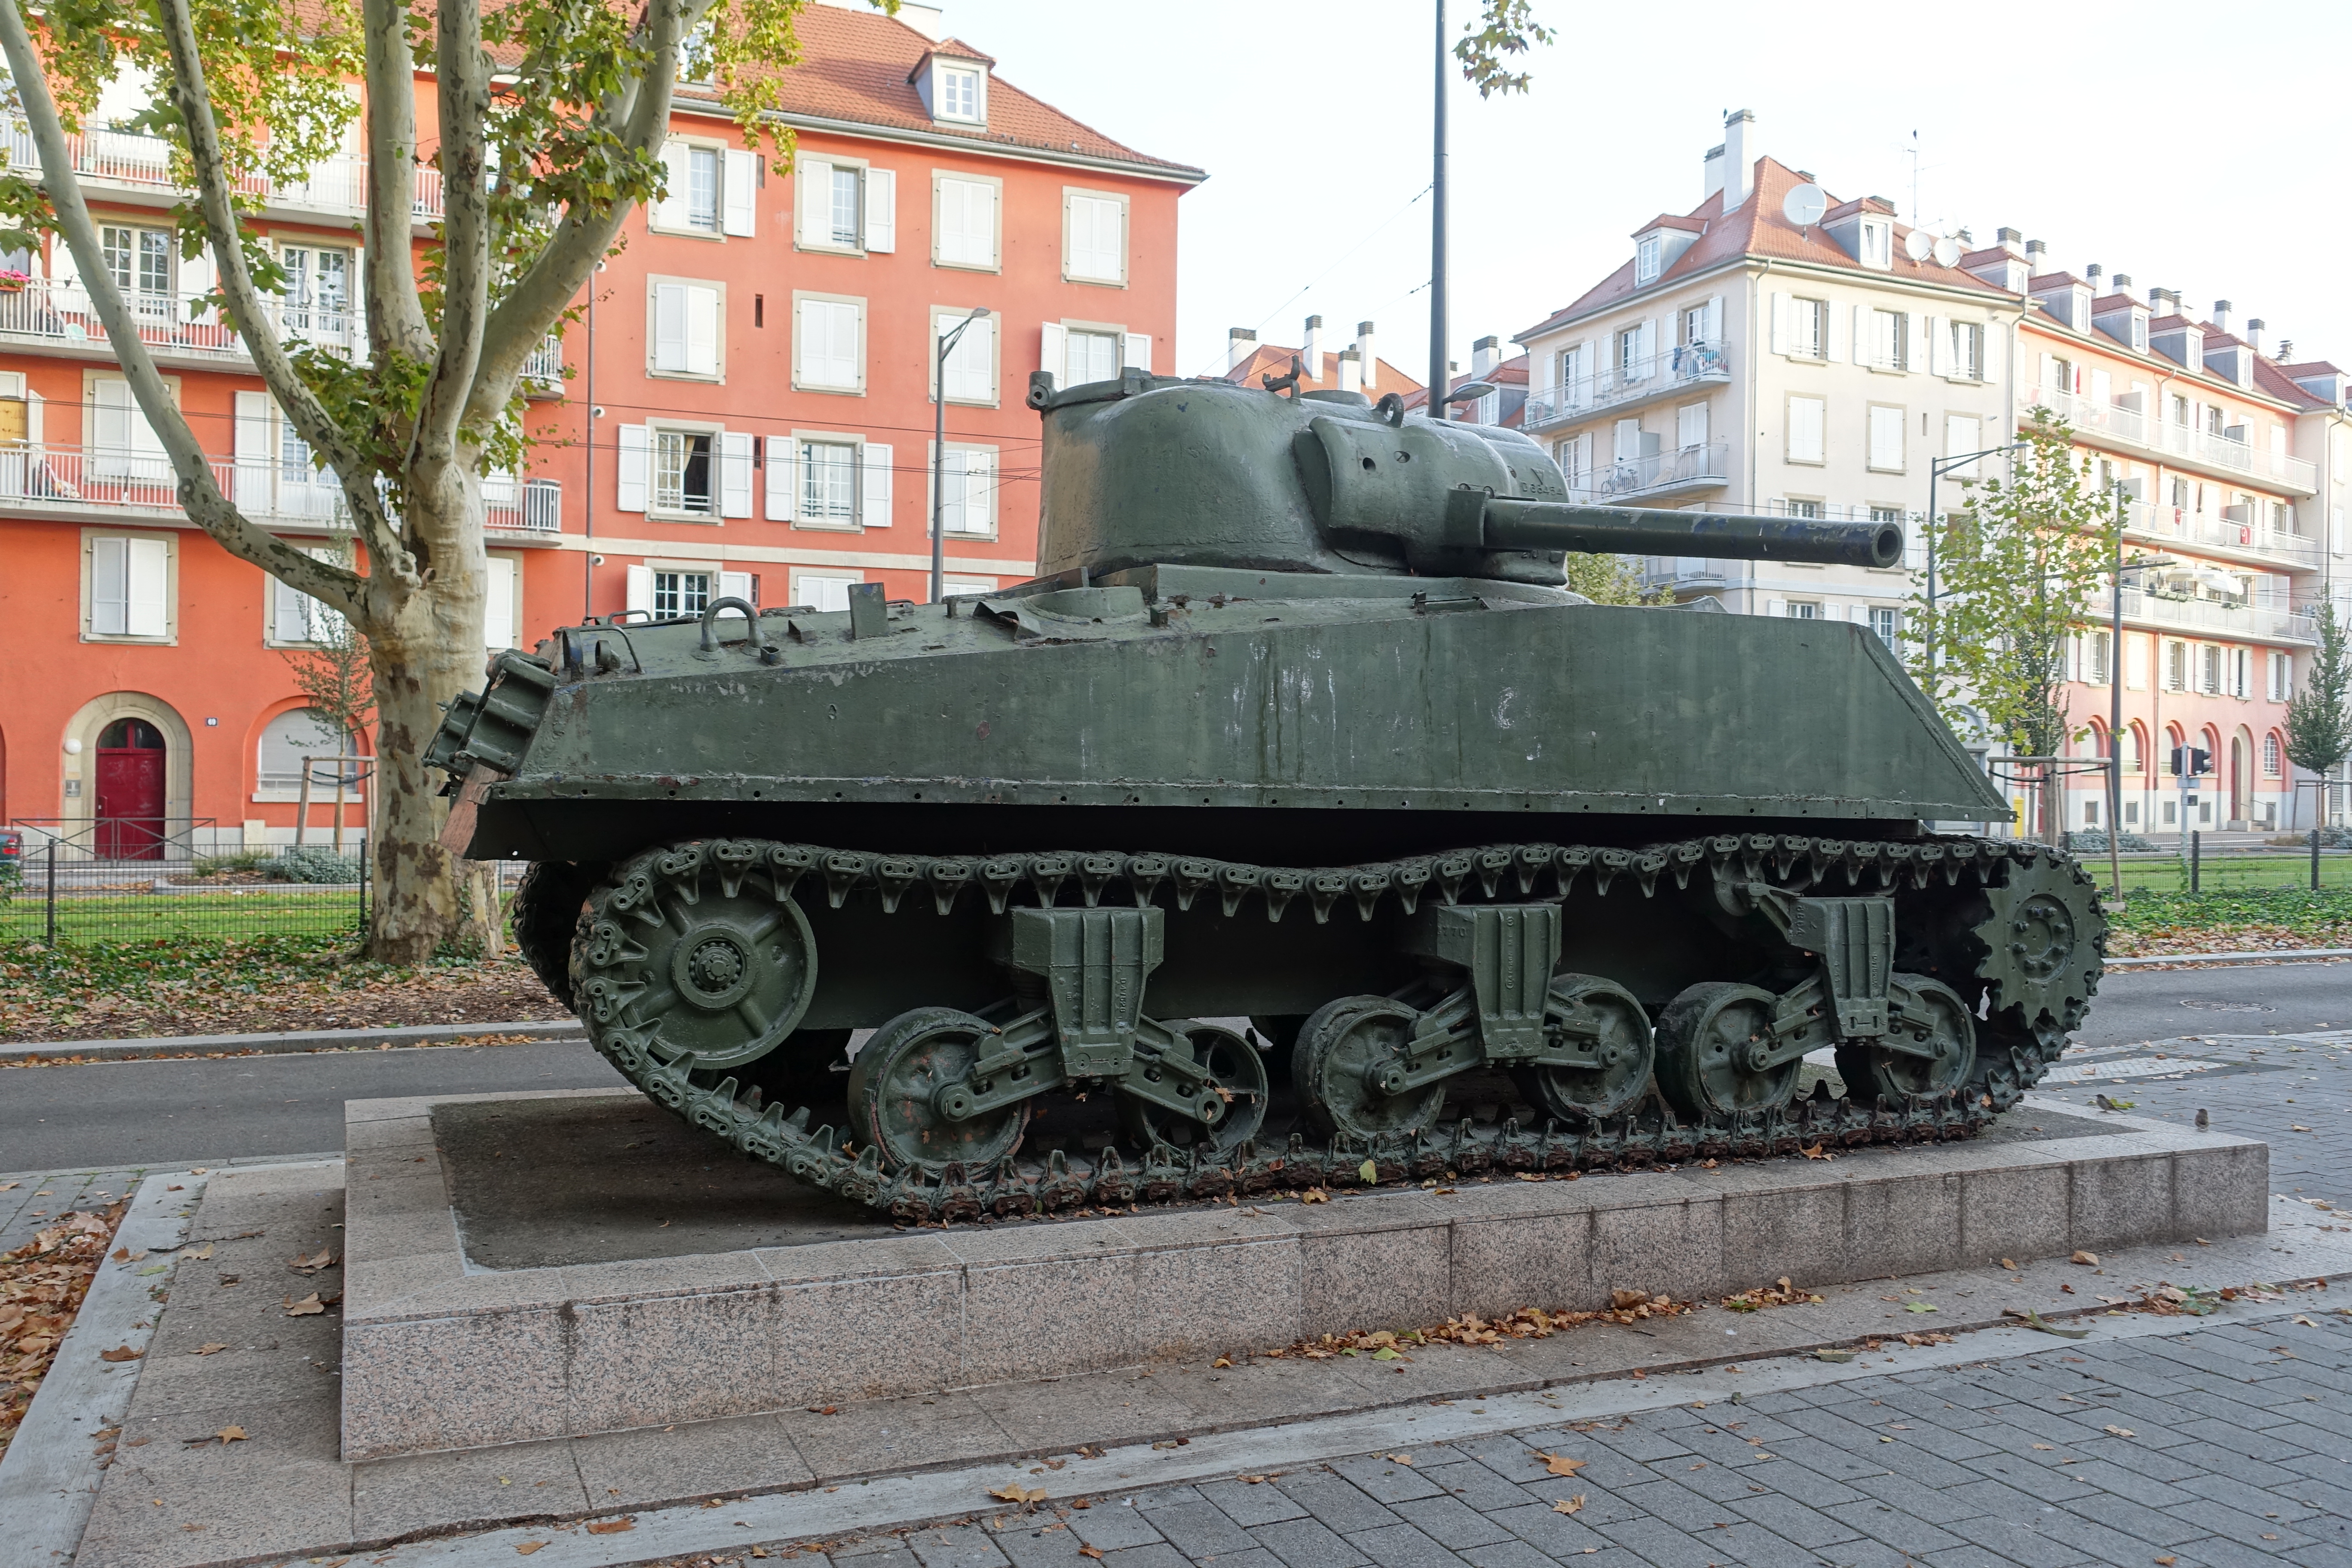 File:ww2 Tank @ Strasbourg (30606945197).Jpg - Wikimedia Commons